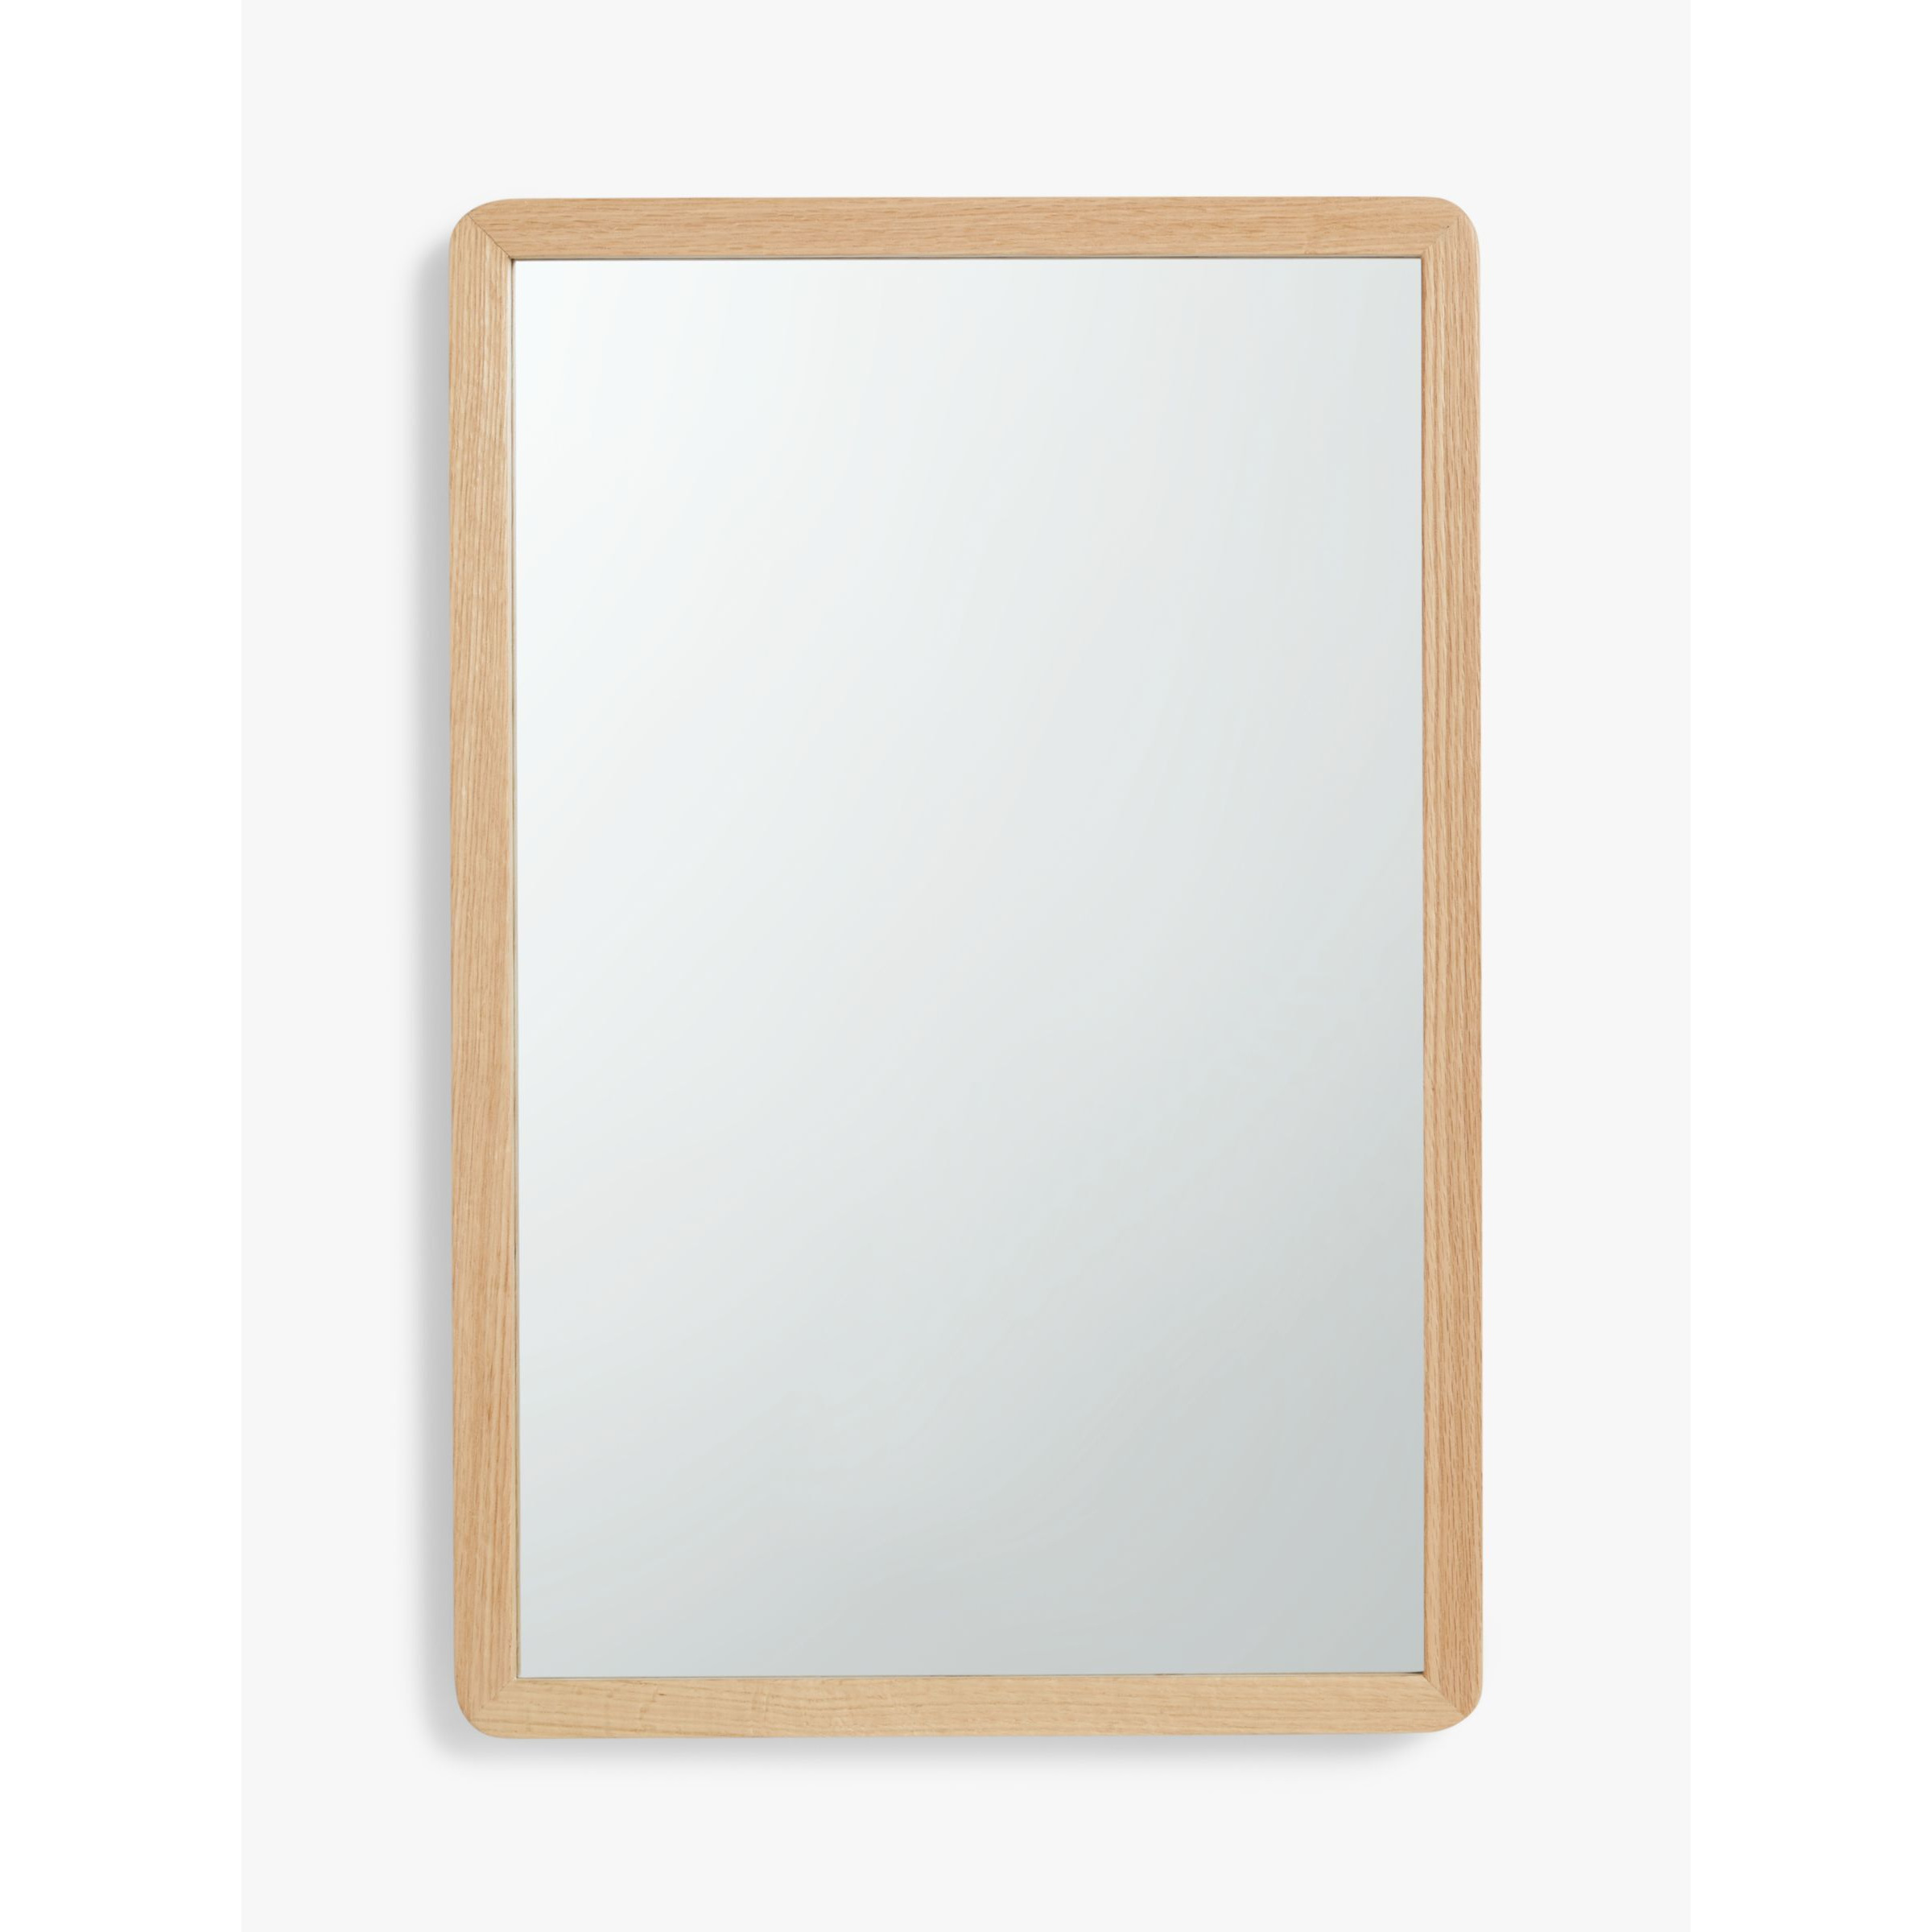 John Lewis Slim Solid Oak Wood Rectangular Wall Mirror, 75 x 50cm - image 1